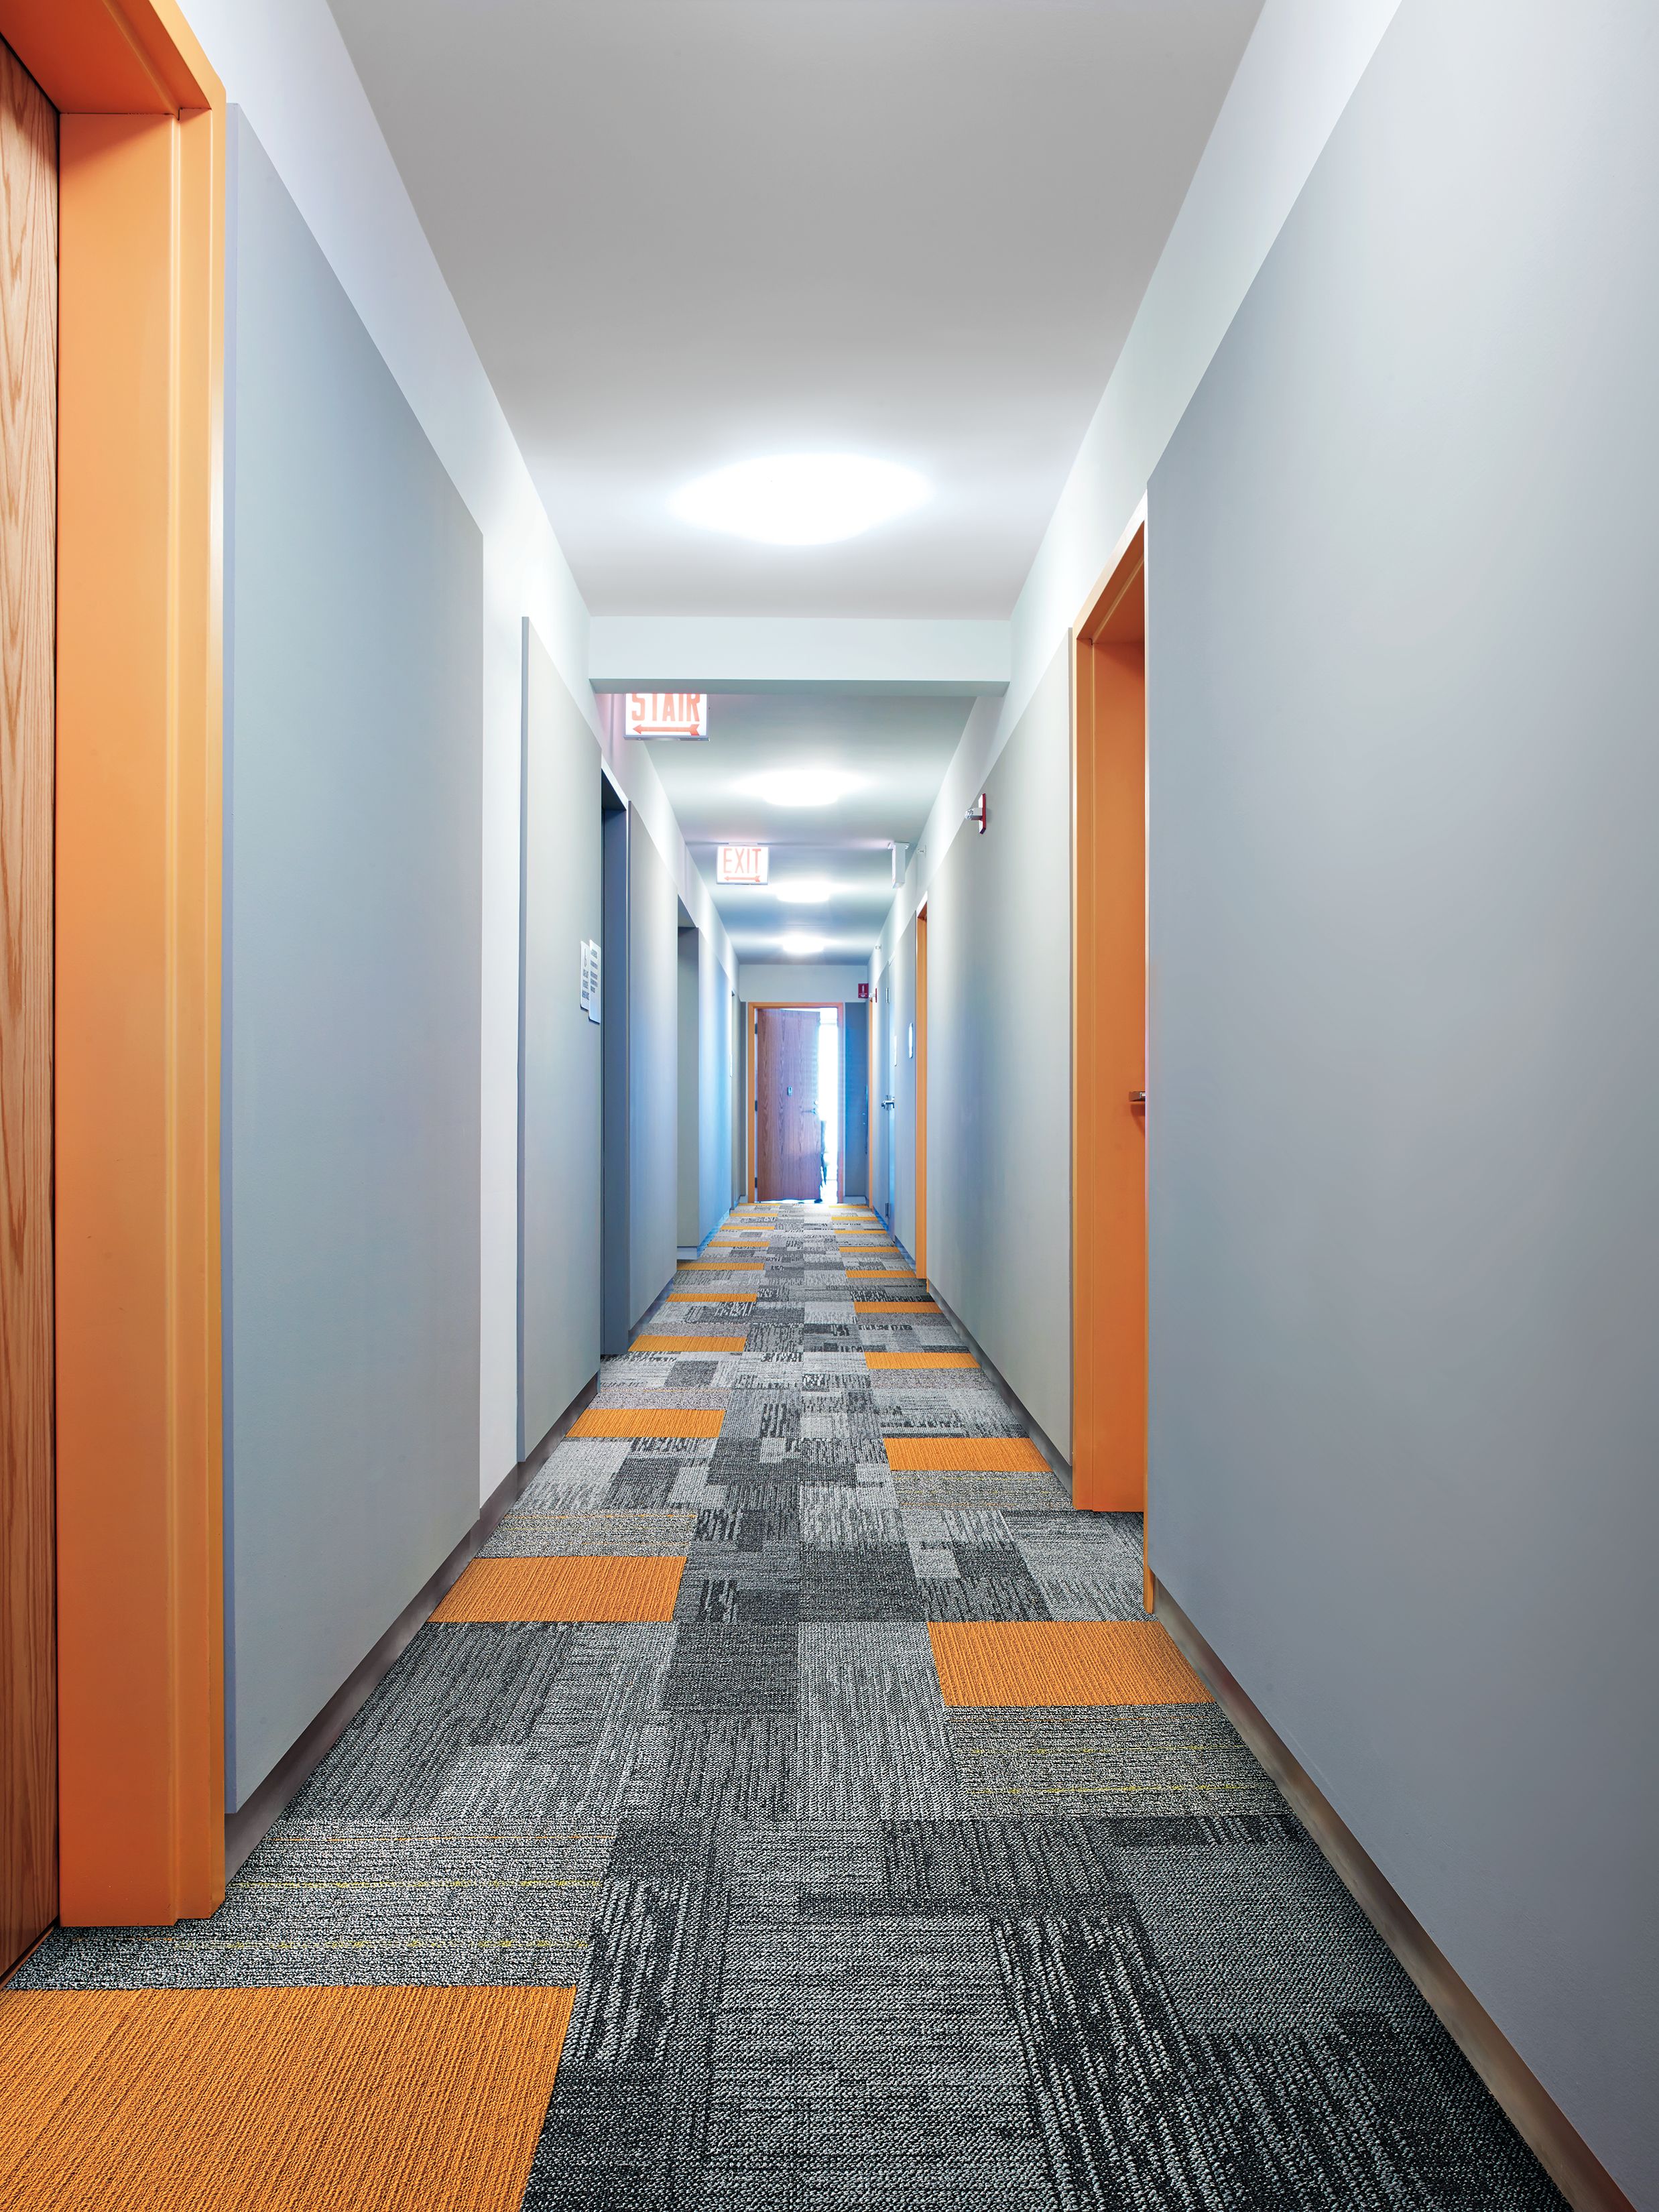 Interface Sidetrack carpet tile in a hallway imagen número 2